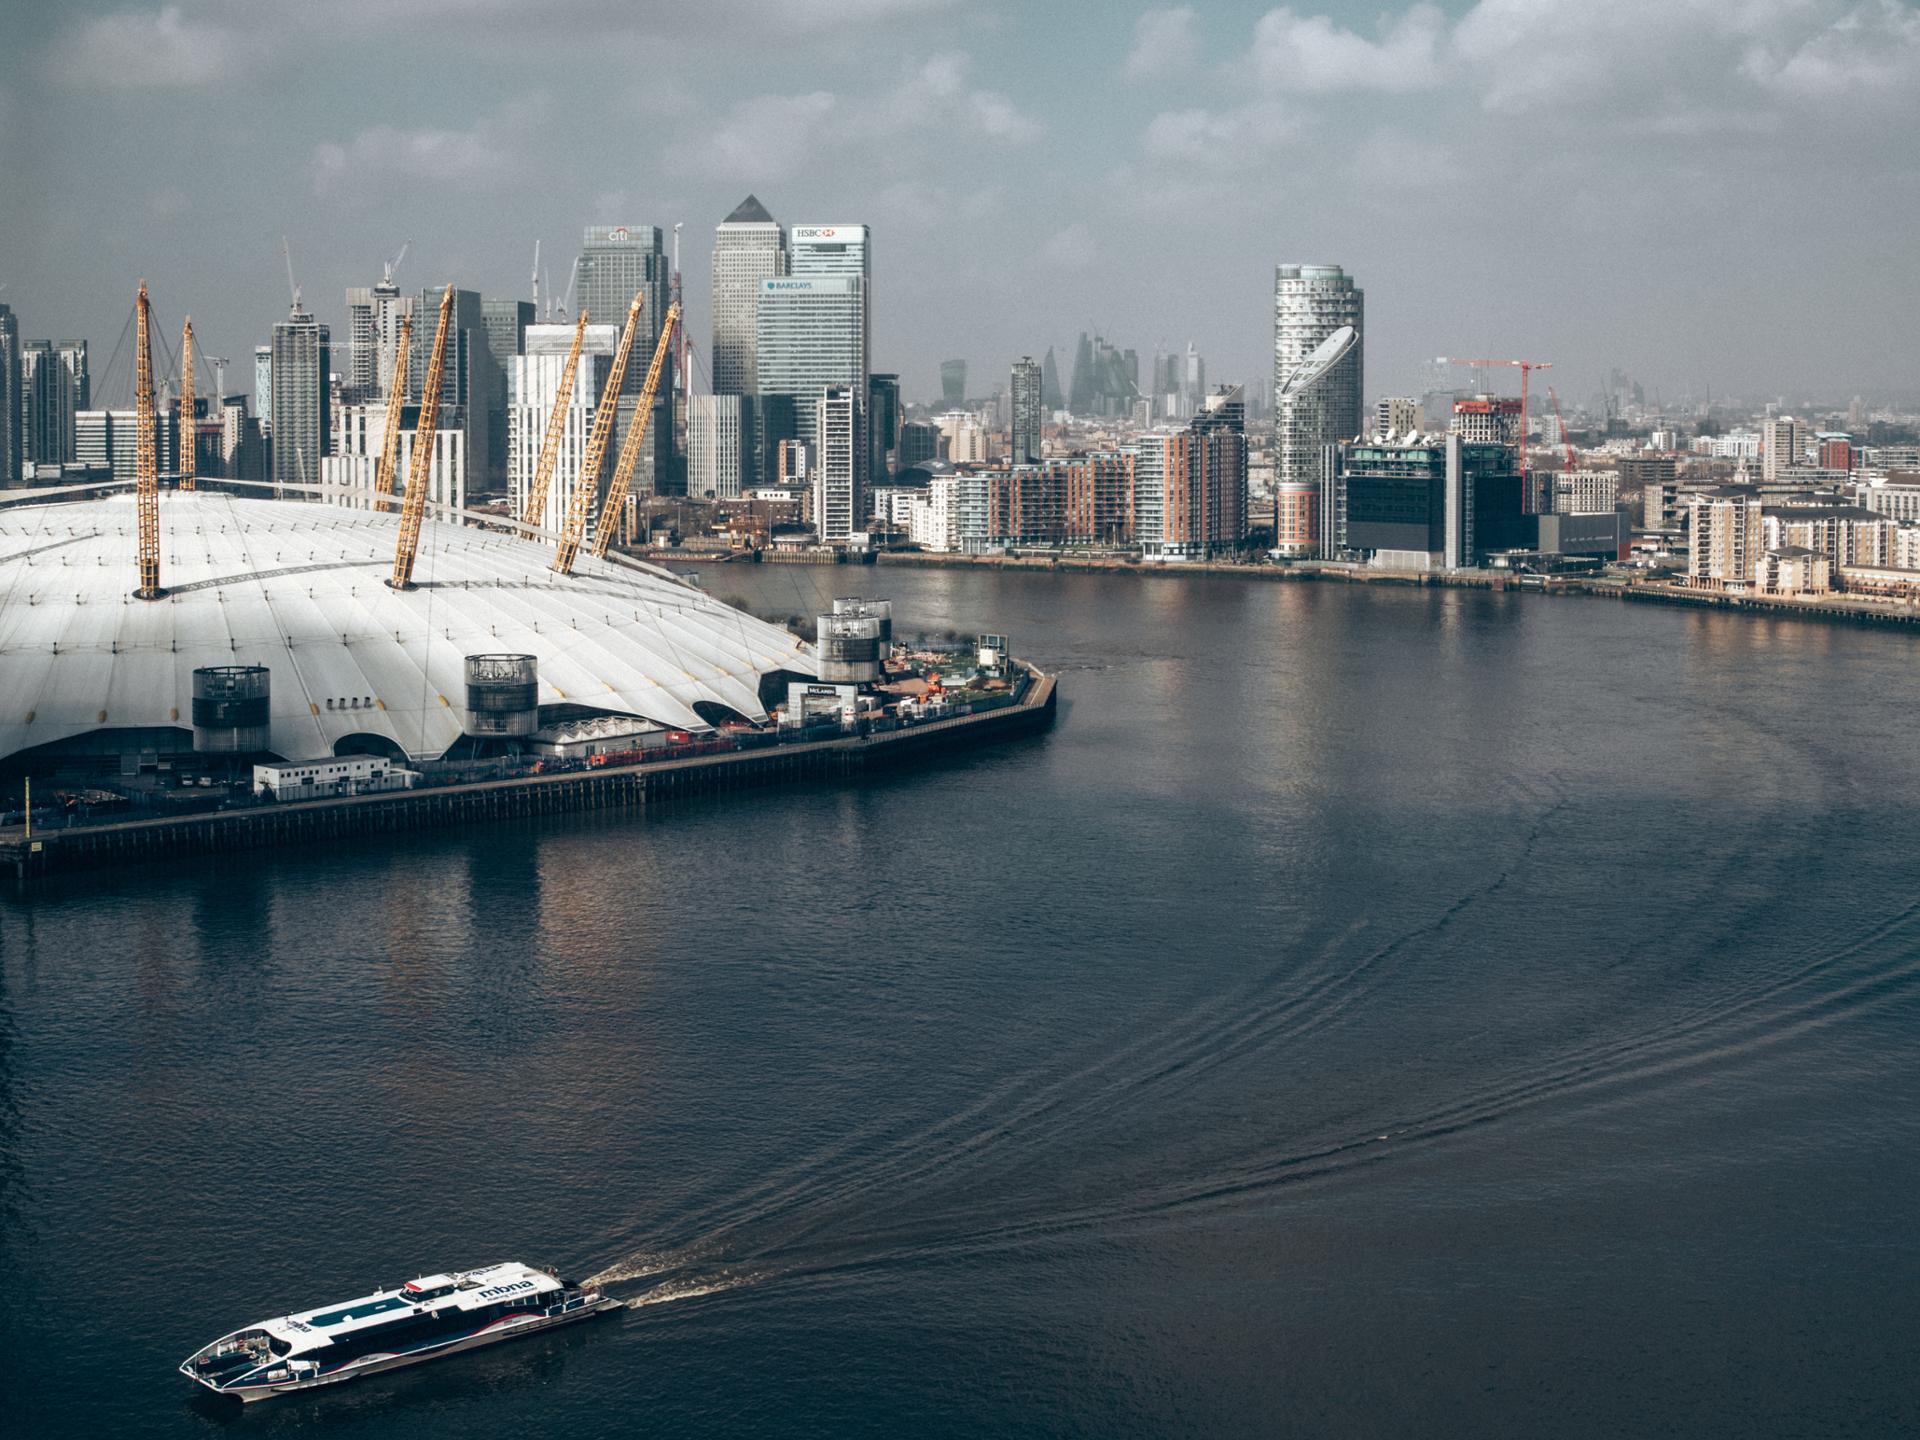 London Docklands.jpg